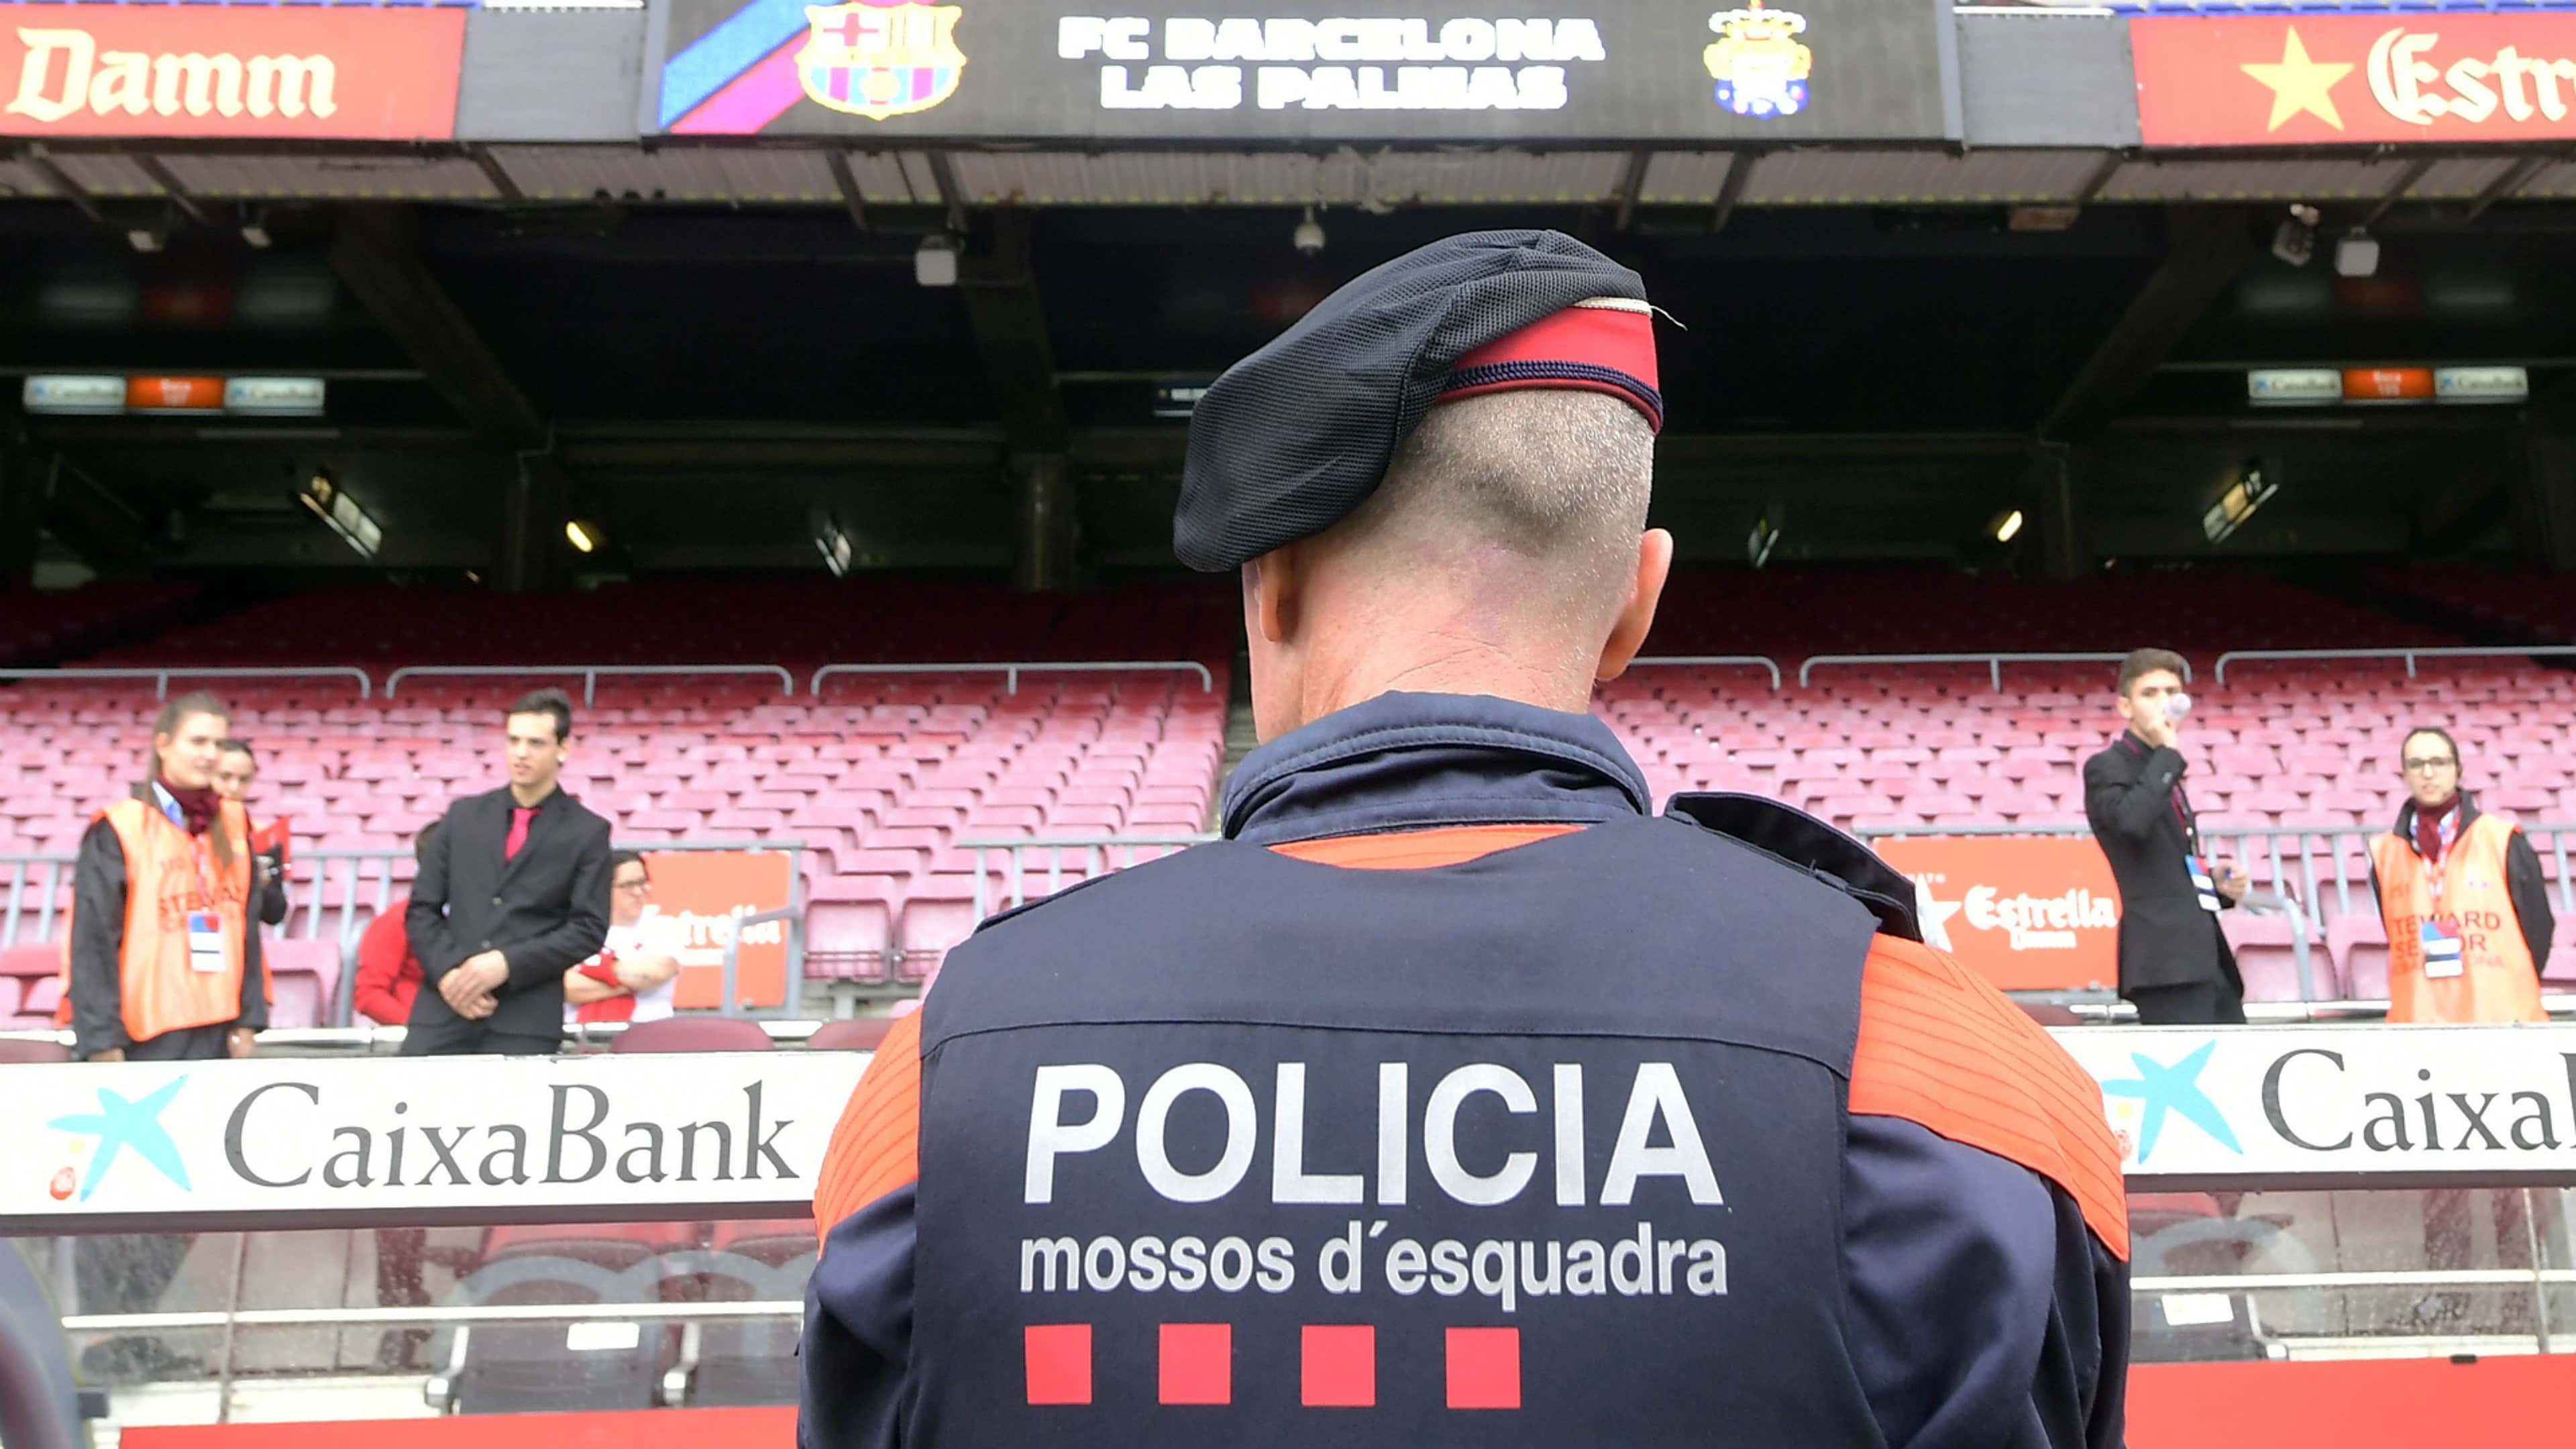 Camp Nou police